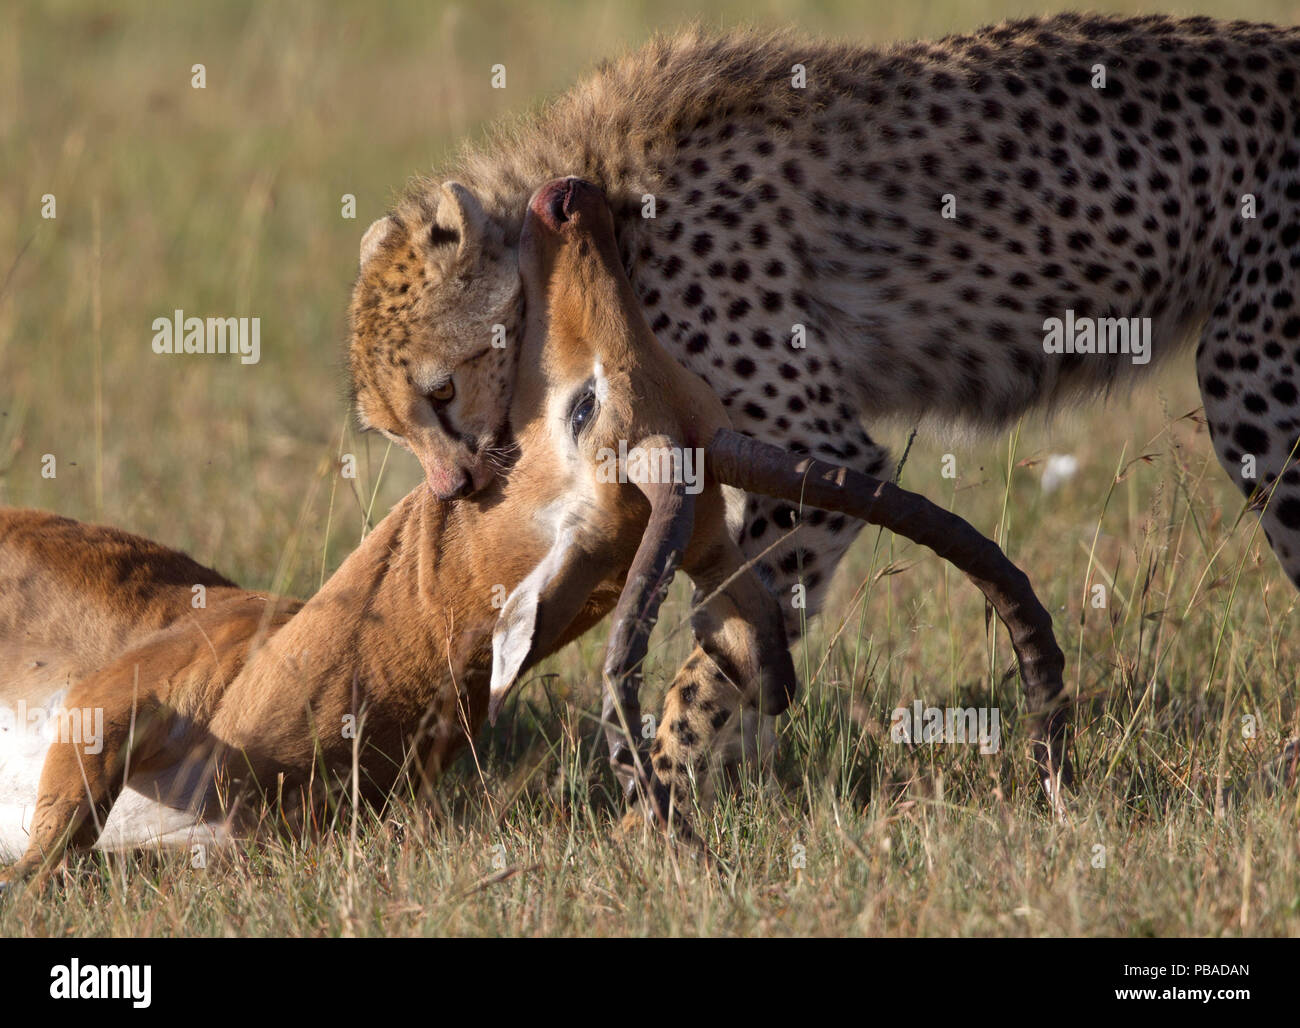 Cheetah (Acinonyx jubatus) biting into throat of Impala (Aepyceros melampus) prey, Masai Mara, Kenya, February. Stock Photo